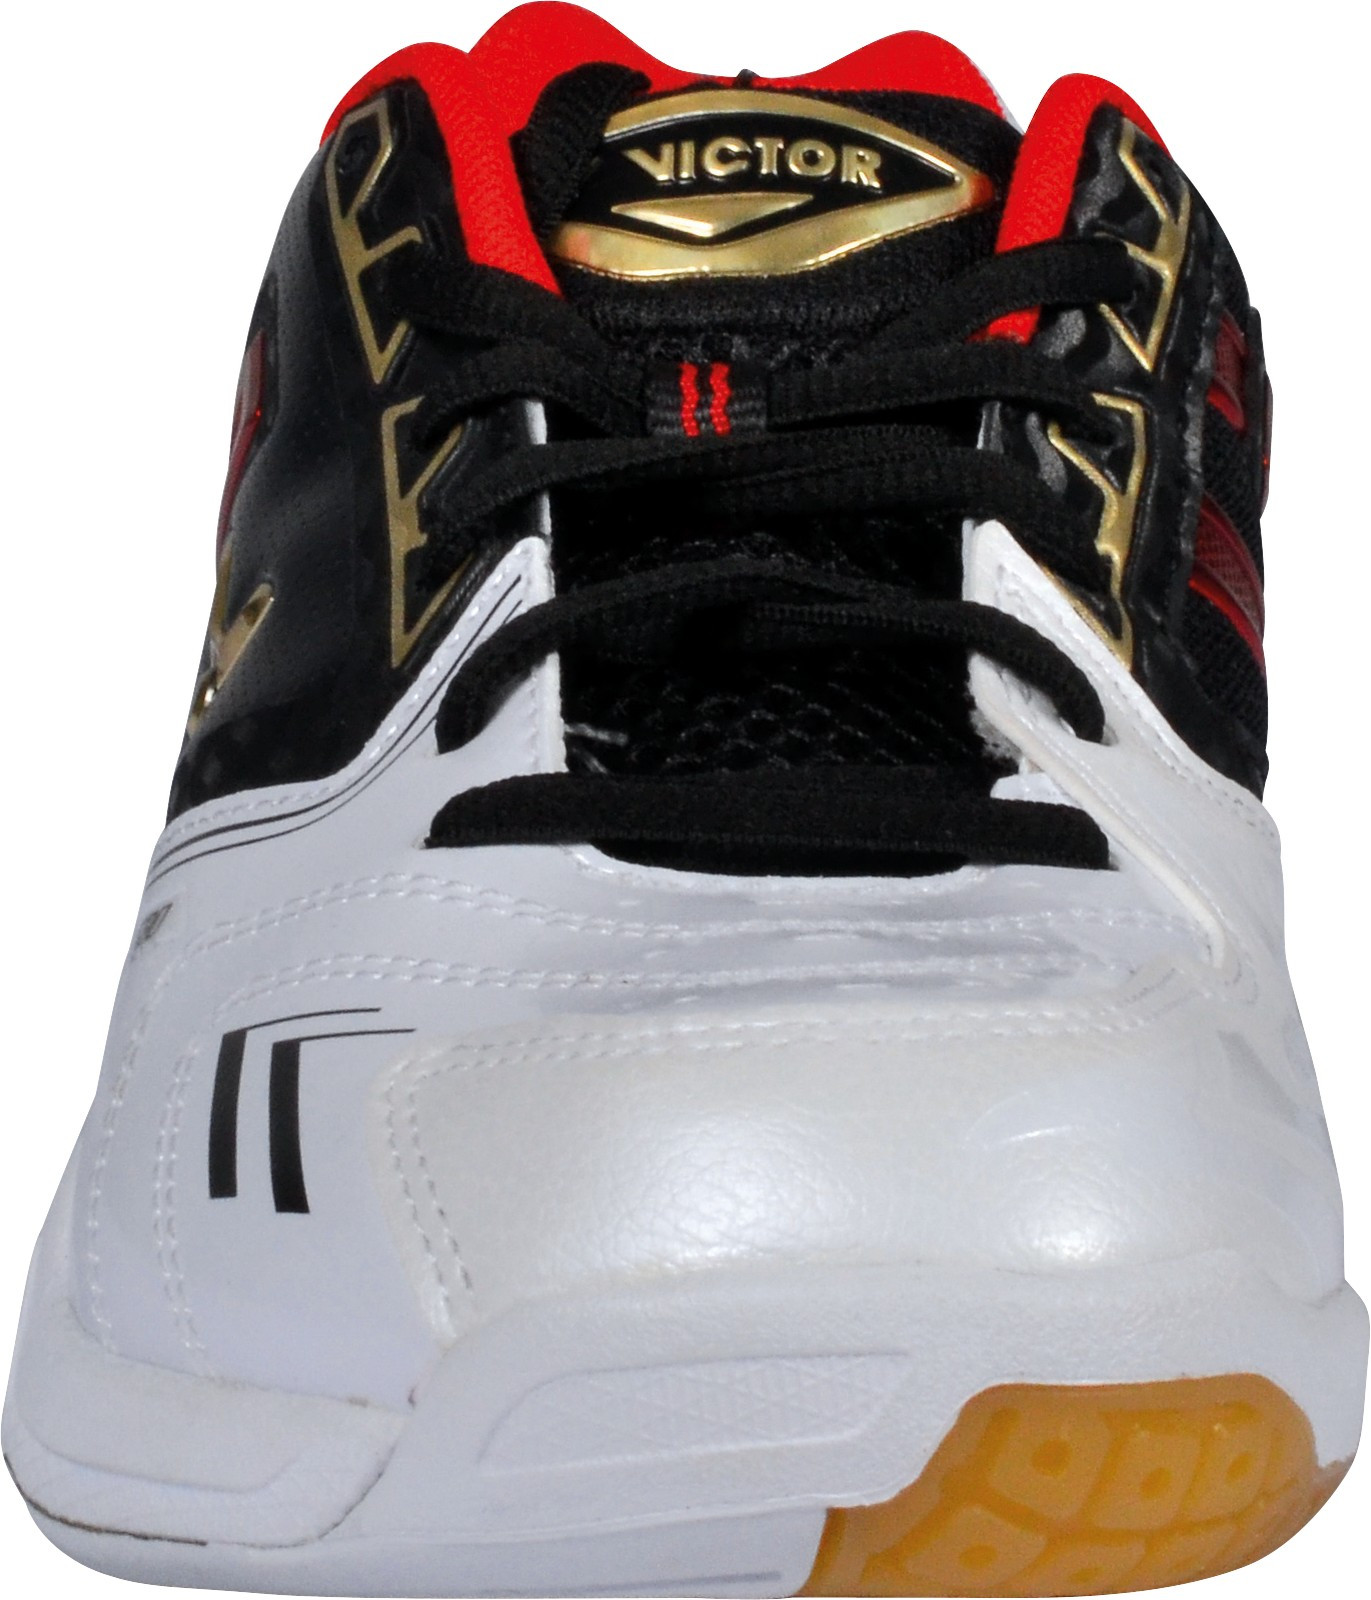 Victor Shoe SH-S80 white  Badminton Shoe 